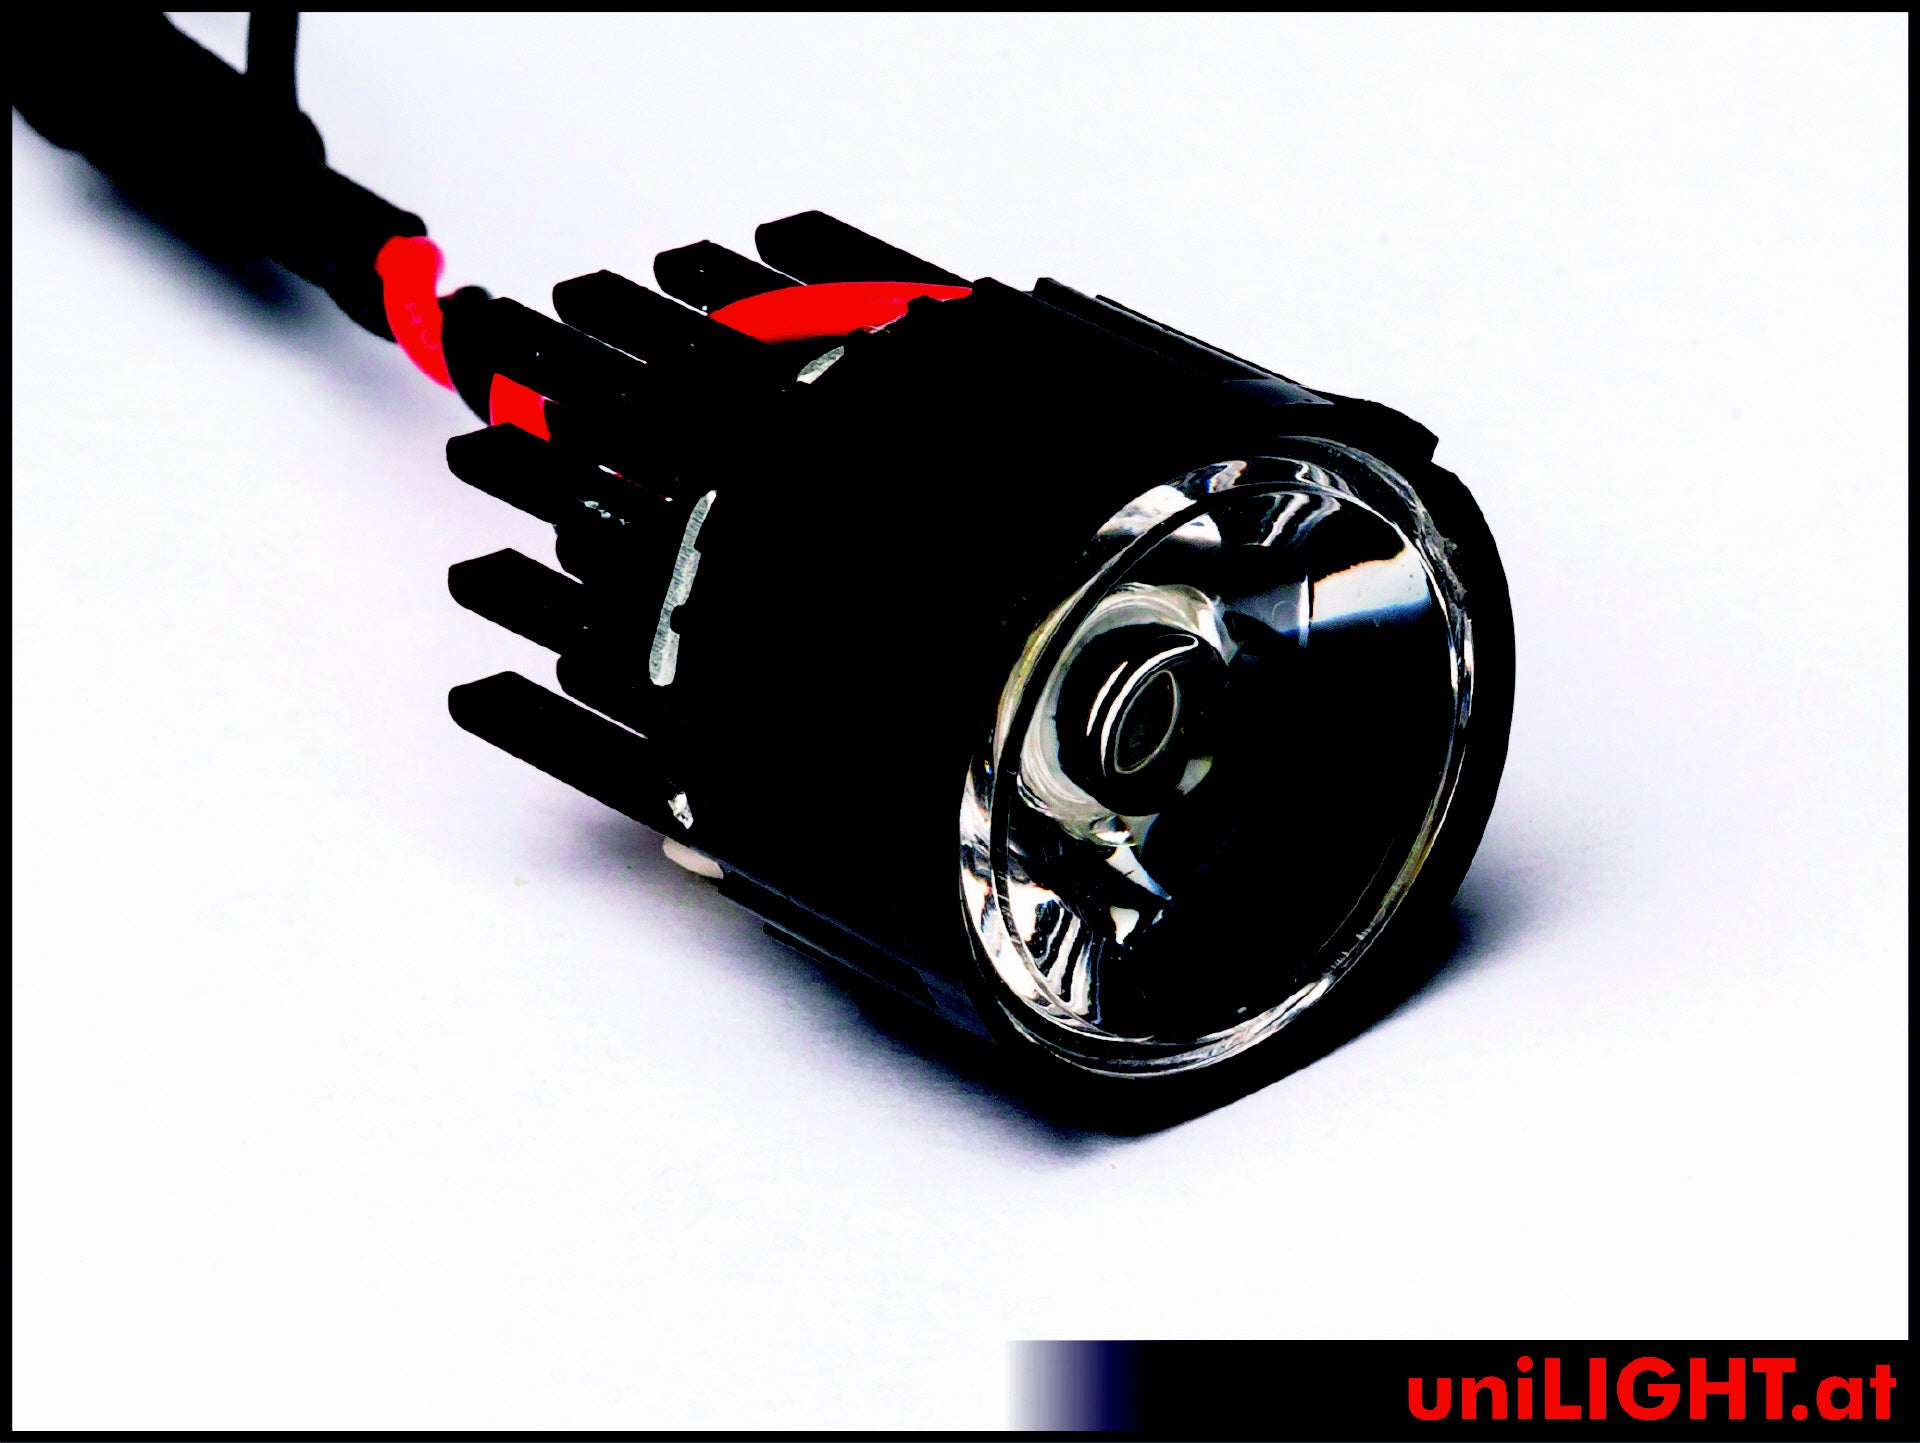 UniLight 8W Eco-Spotlight With Lens, 22mm T-Fuse White